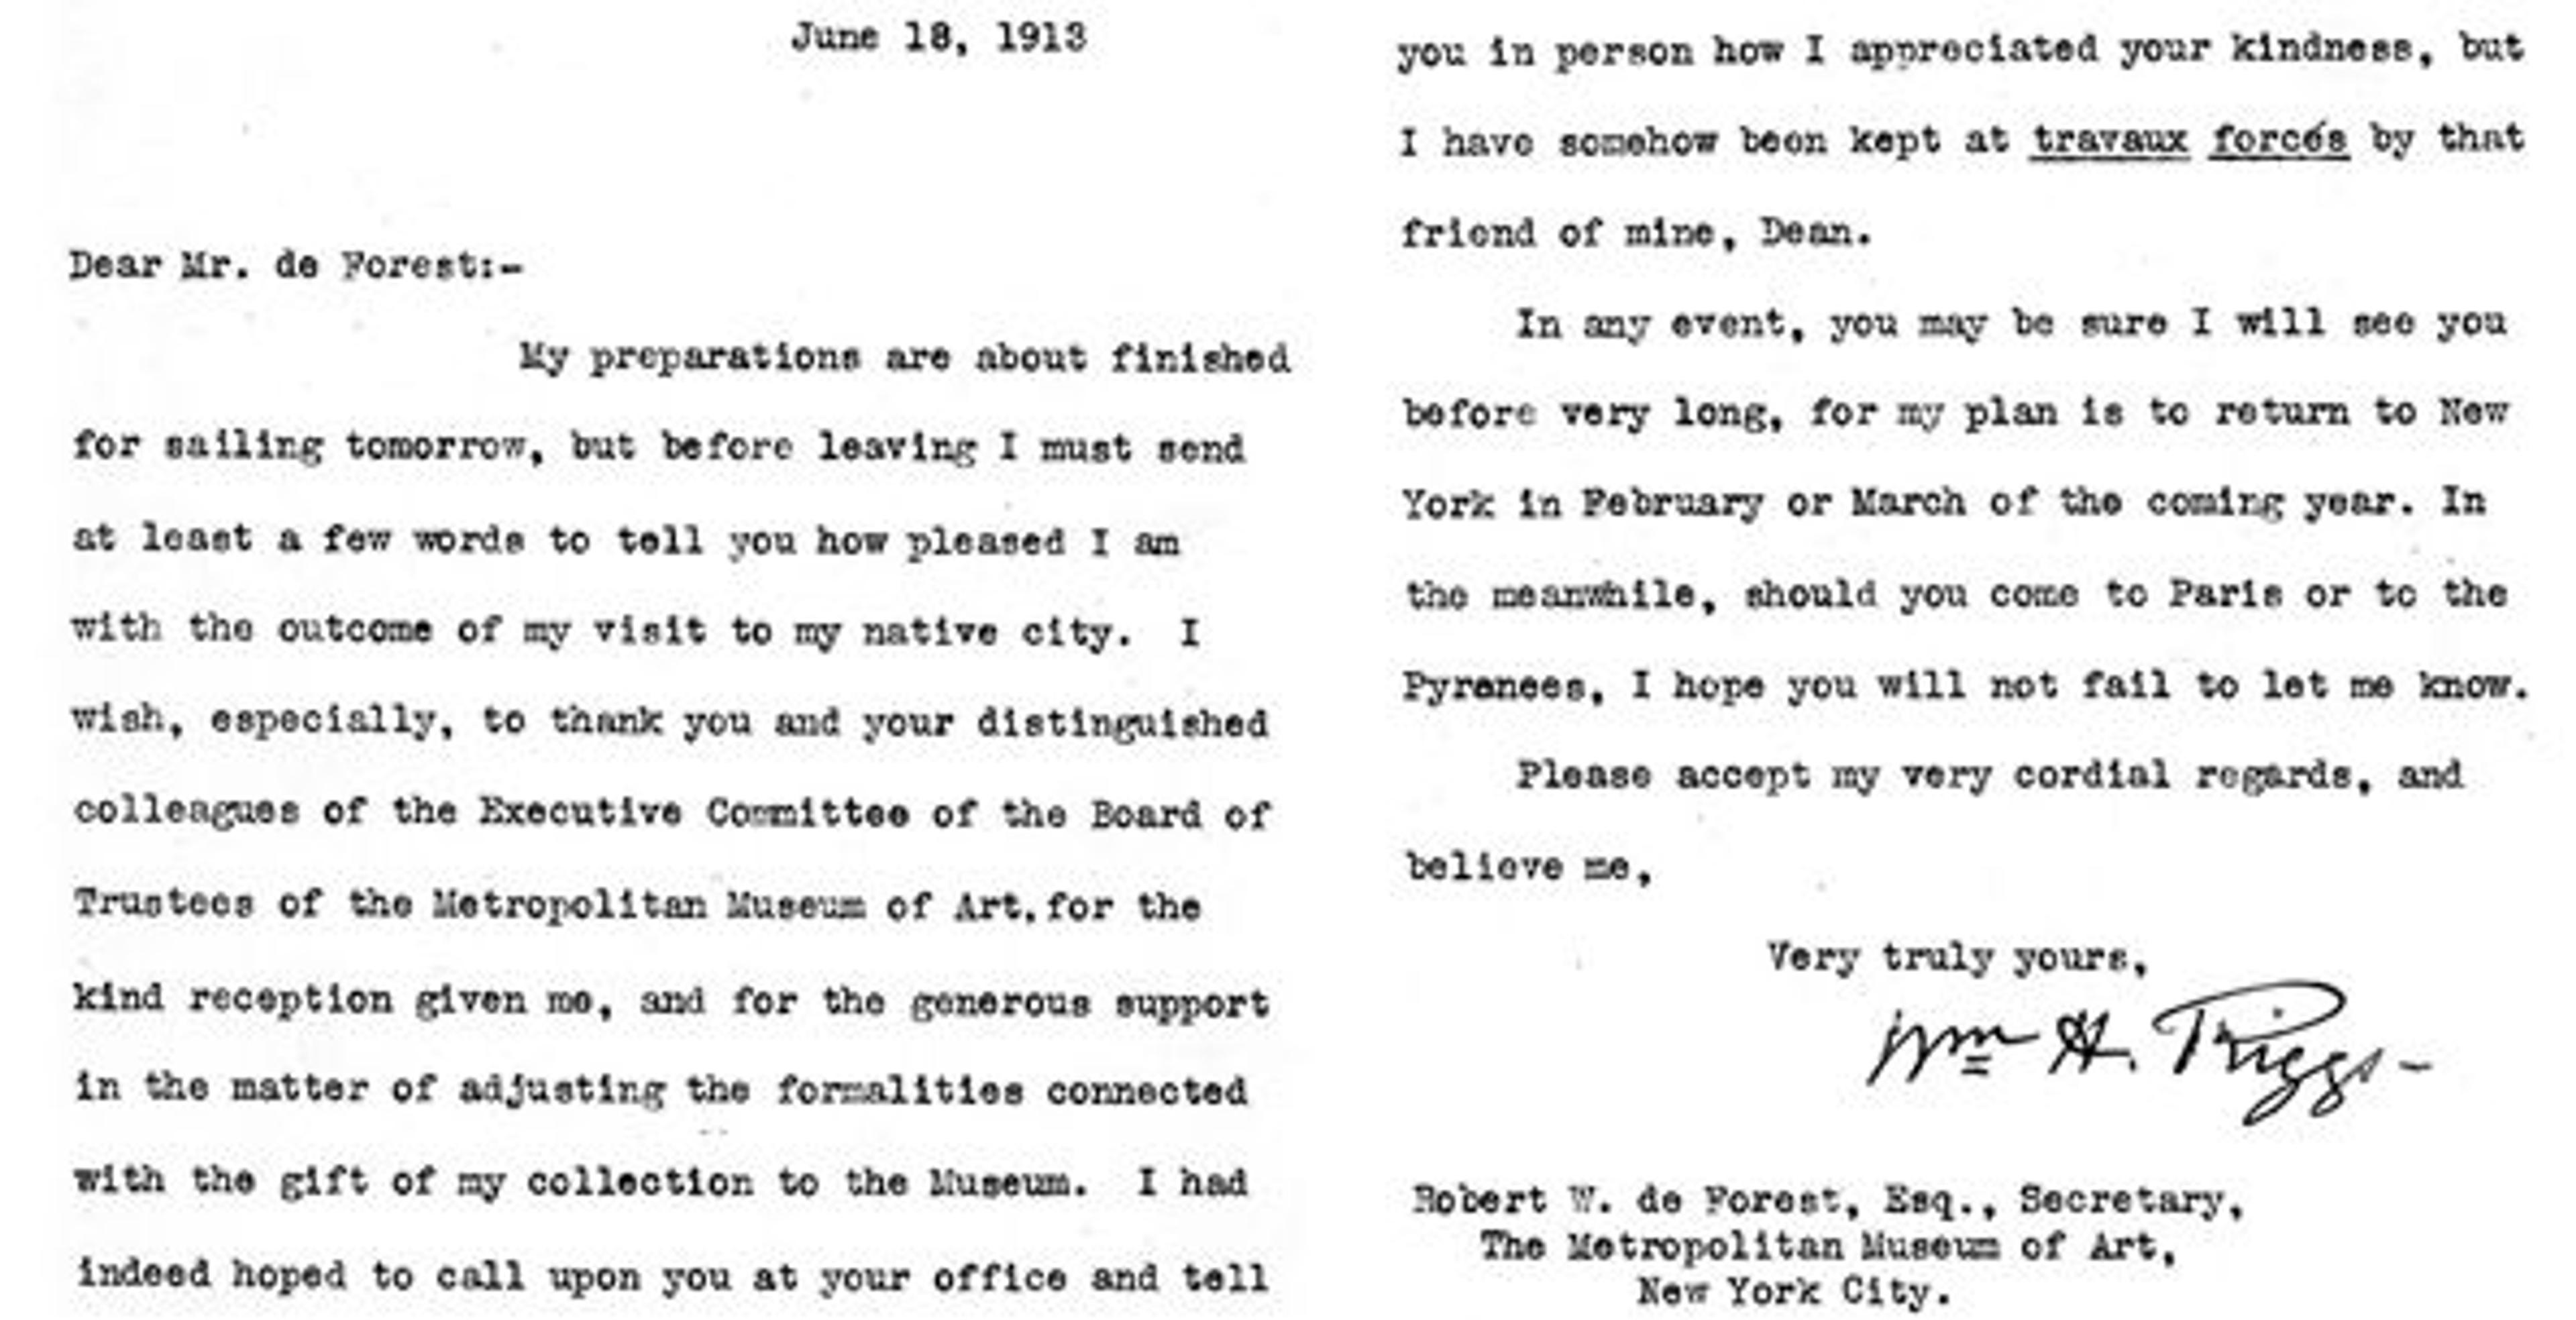 William H. Riggs letter to Museum Secretary Robert W. de Forest